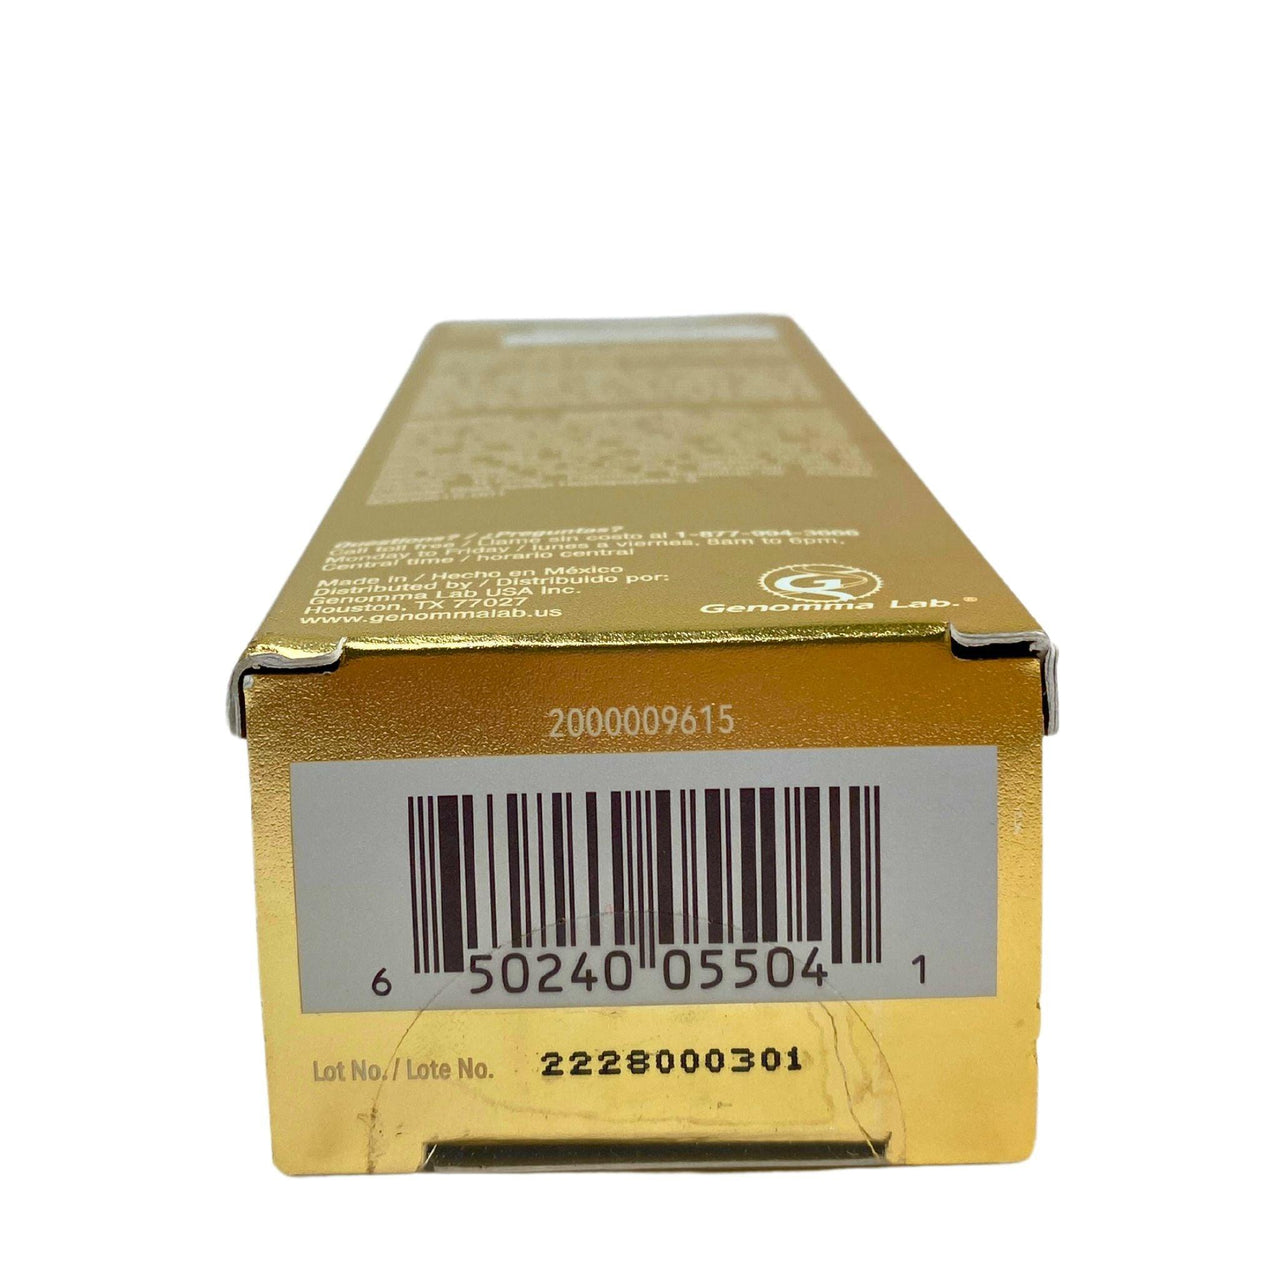 Cicatricure Gold Lift Dual Contour Eyes and Lip Wrinkle Cream 0.5oz (36 Pcs Lot) - Discount Wholesalers Inc